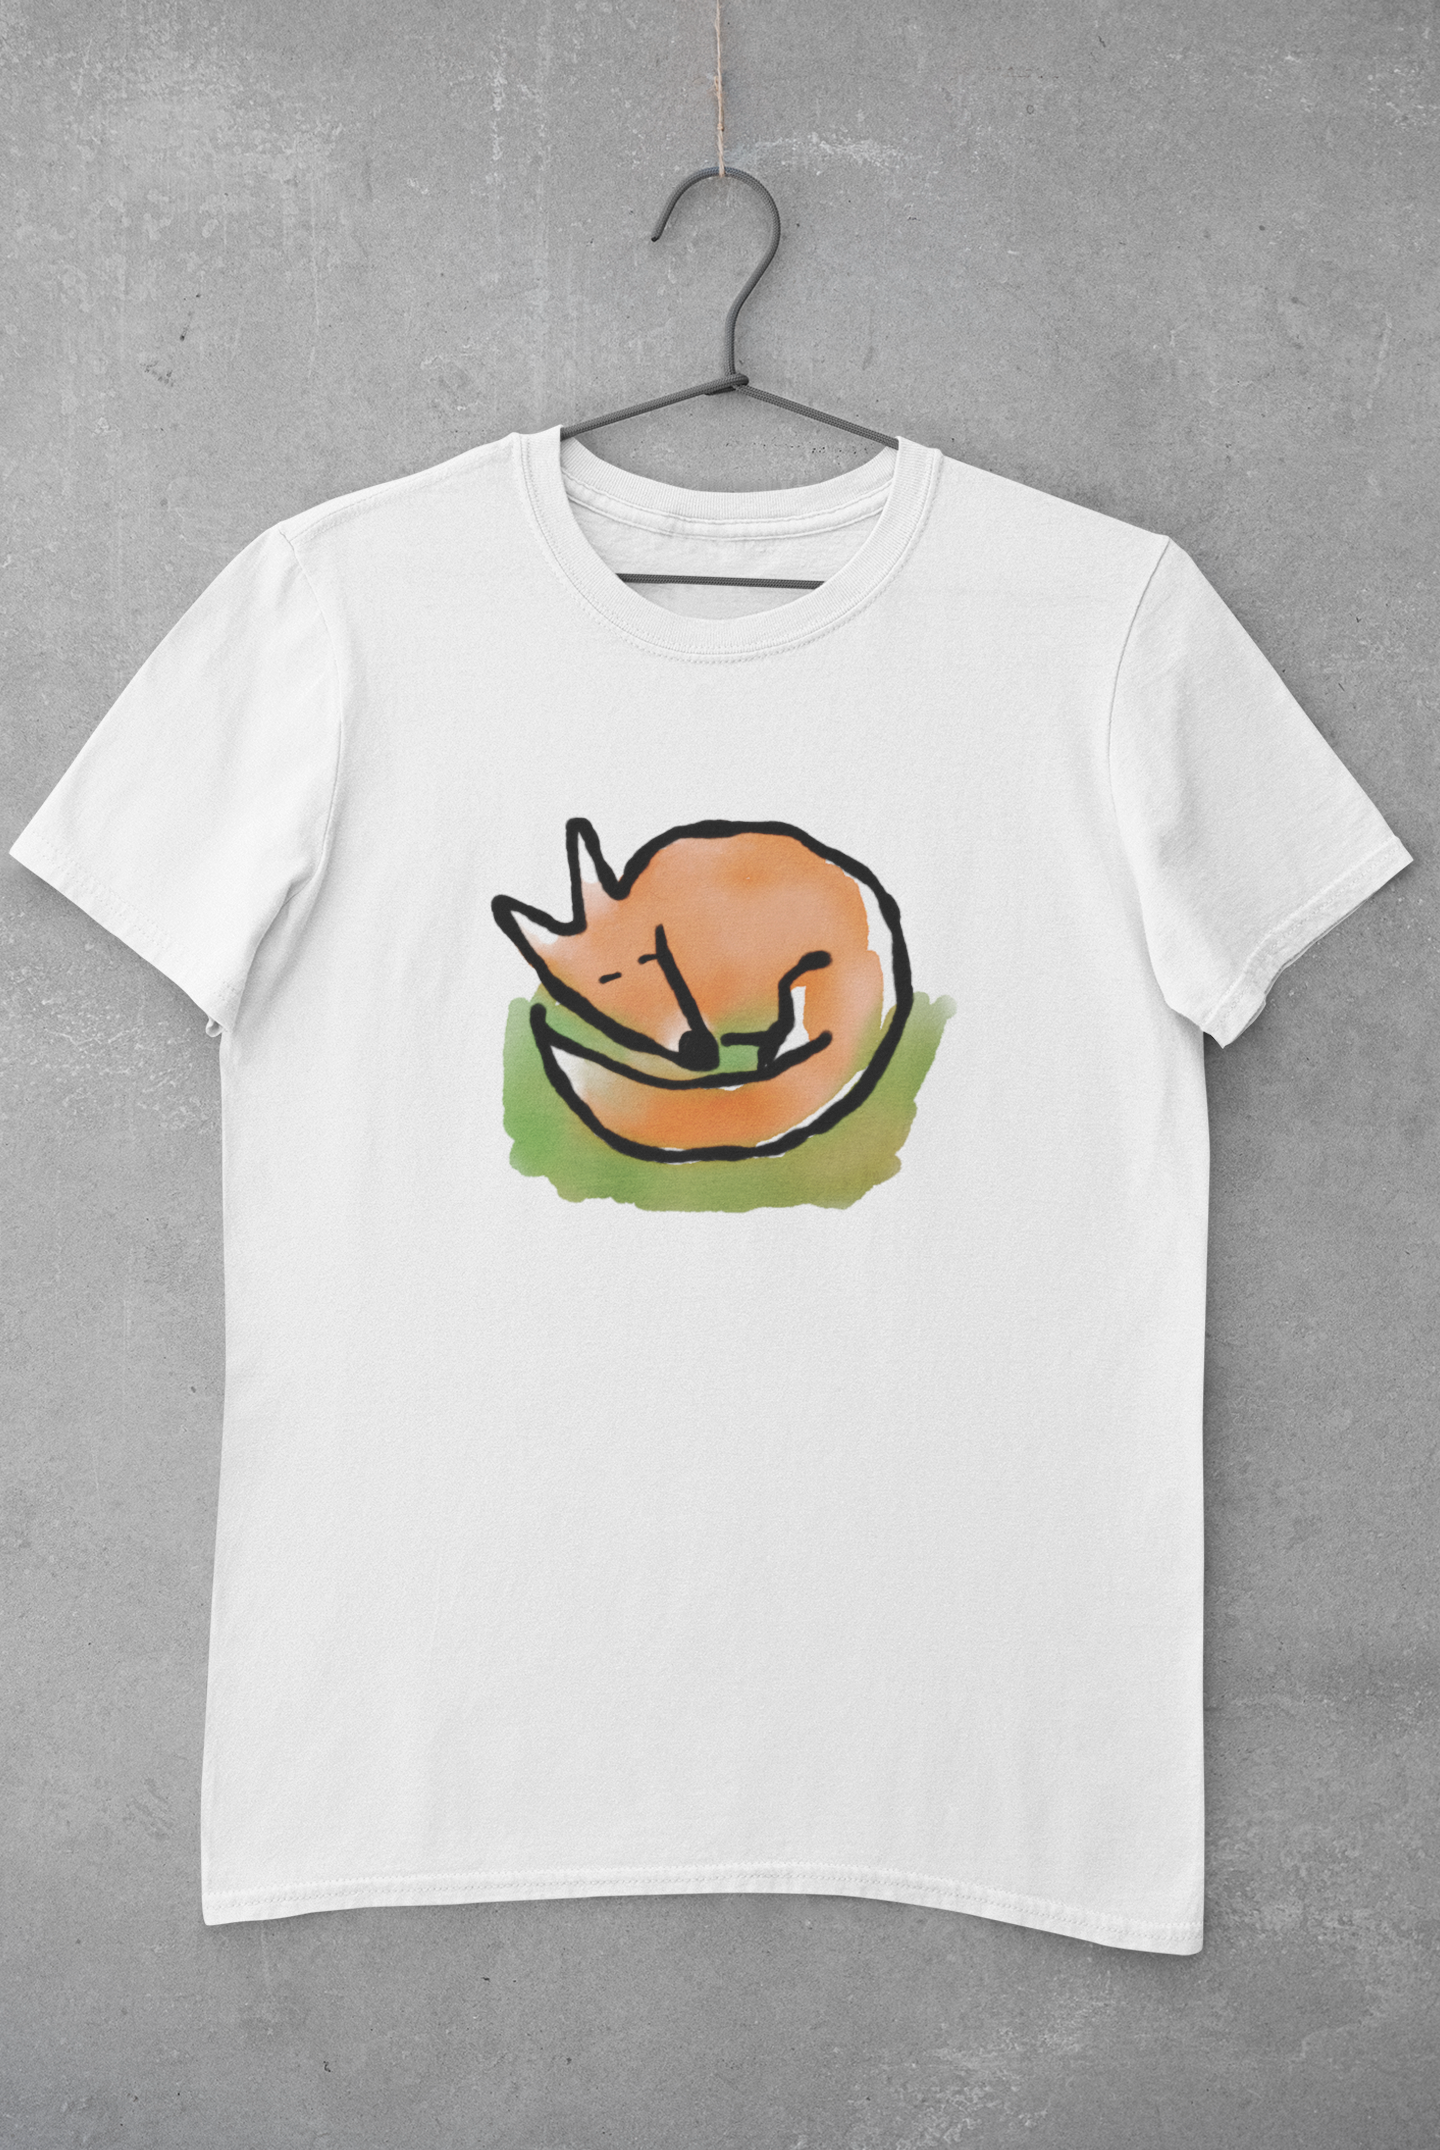 Sleeping Fox T-shirt in white vegan cotton. Illustrated original cute fox t-shirt design by Hector and Bone